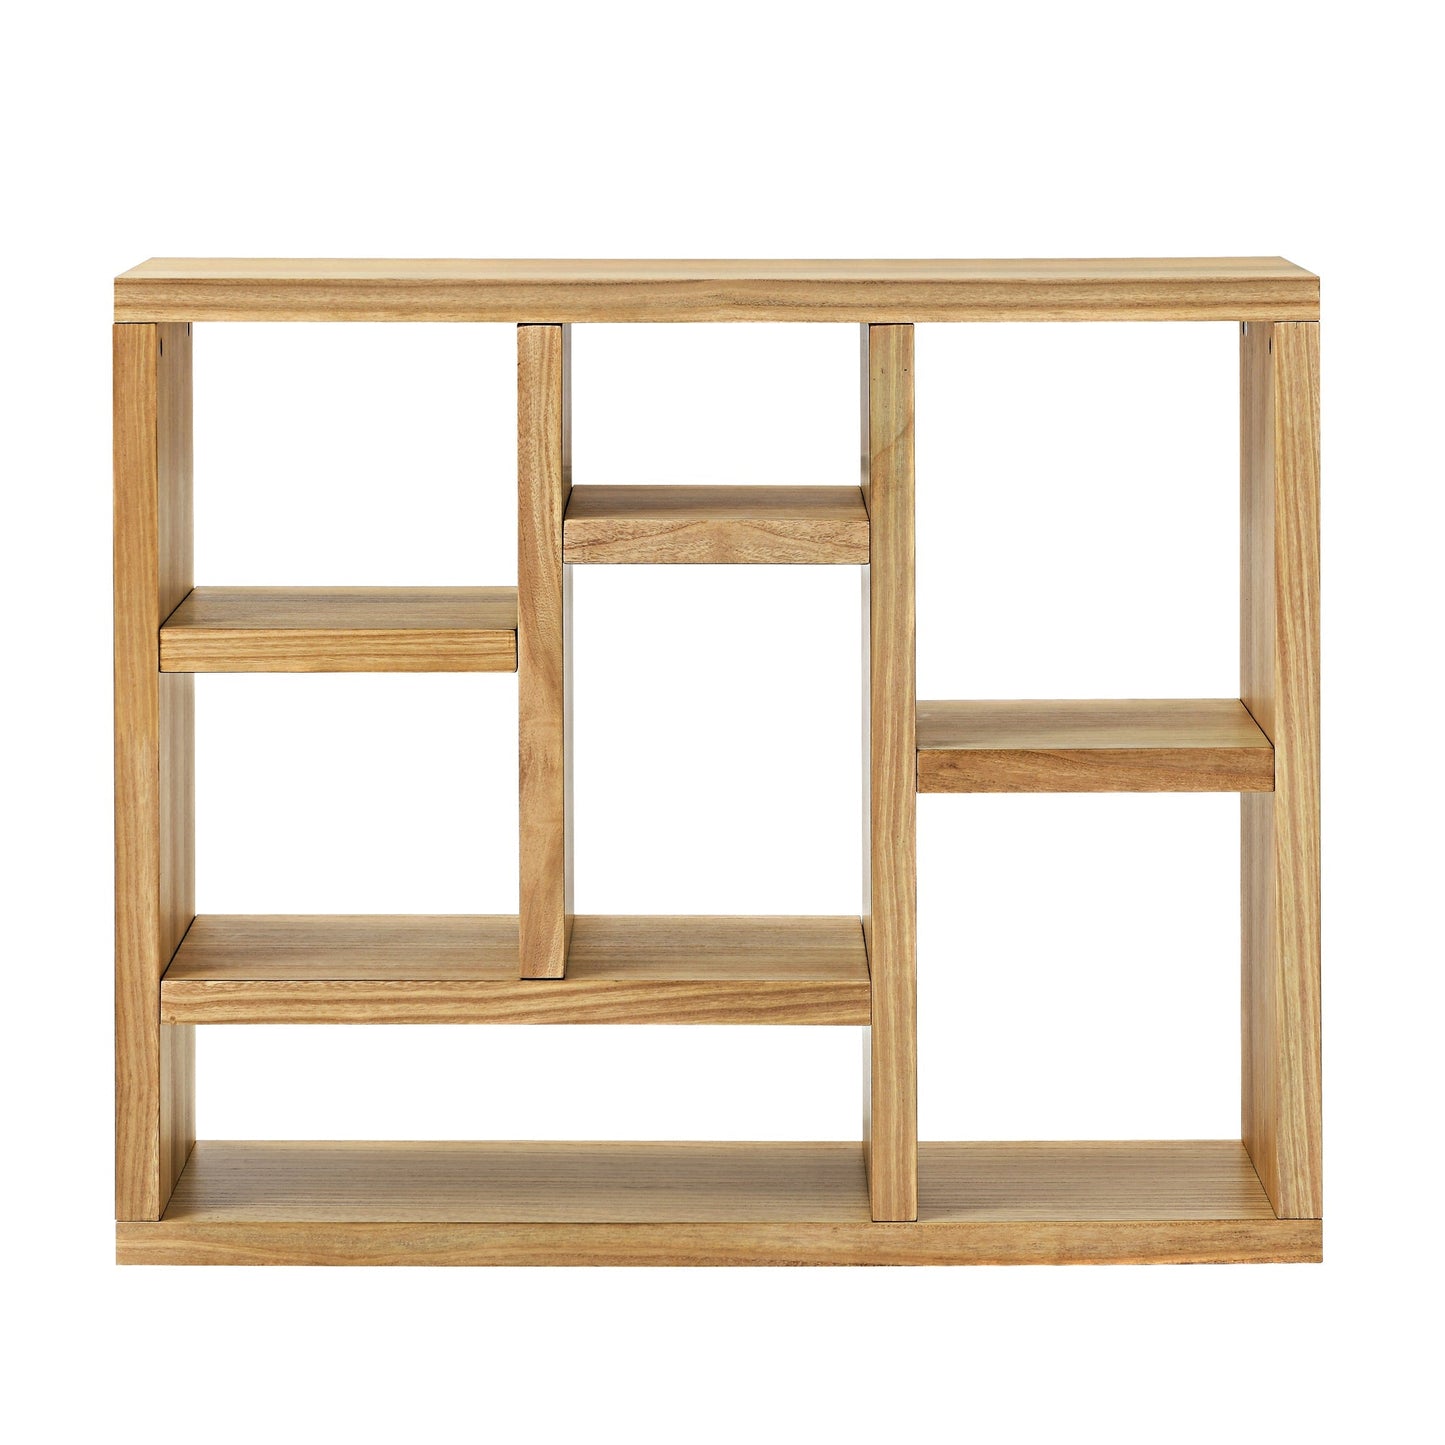 Open Wooden Open Shelf Bookcase, Freestanding Display Storage Cabinet with 7 Cube Storage Spaces, Floor Standing Bookshelf, Entryway, Living Room Storage Cabinet